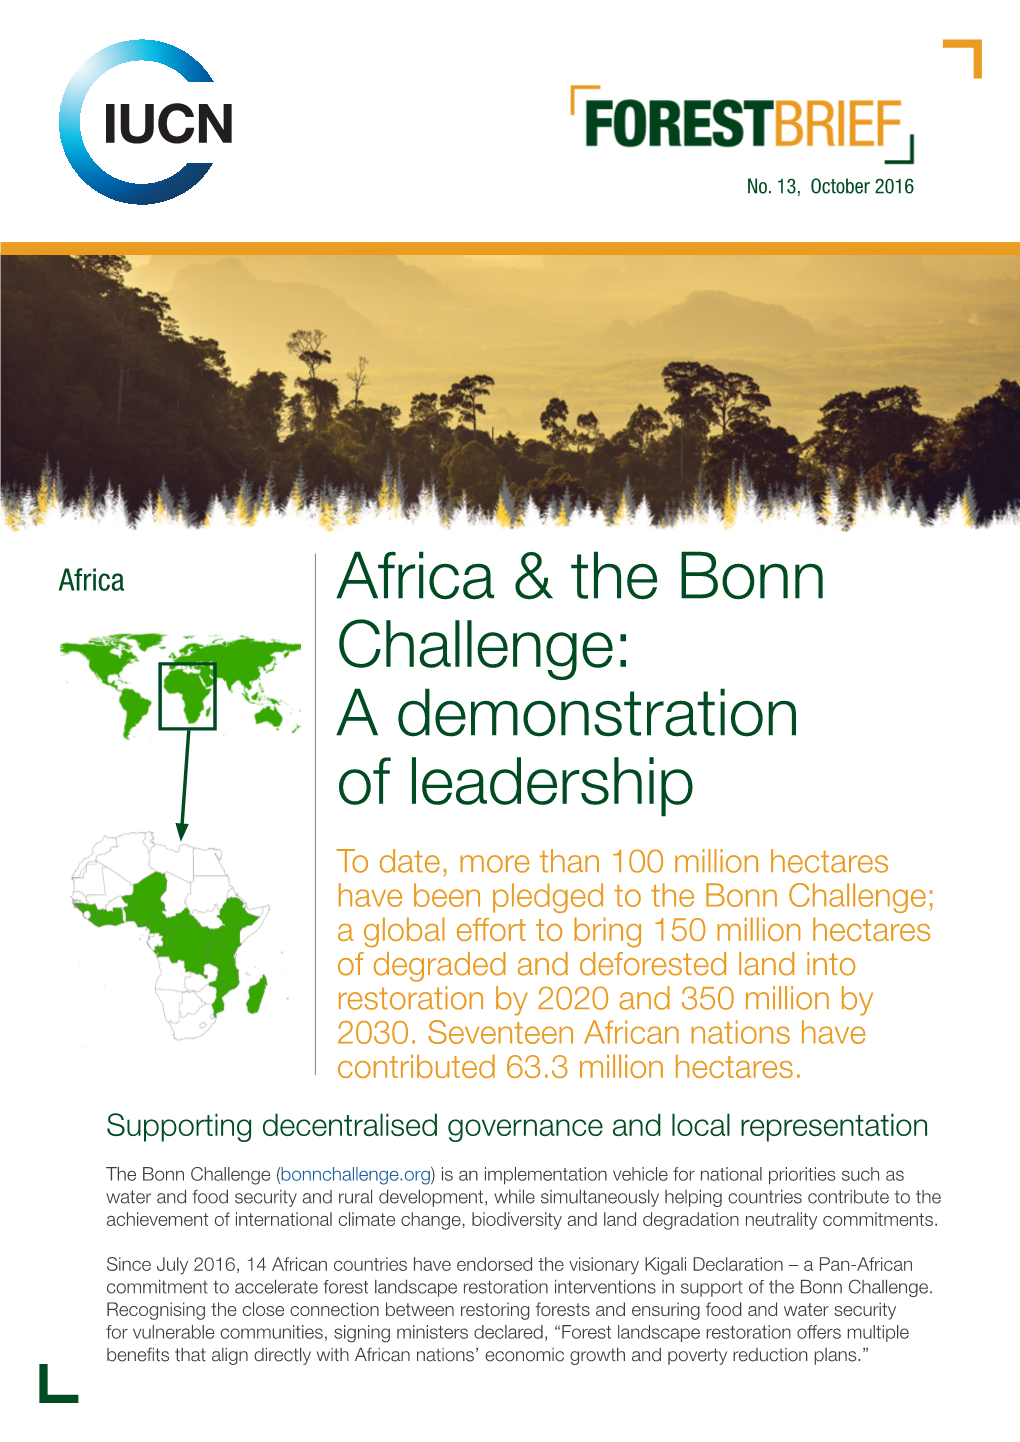 Africa & the Bonn Challenge: a Demonstration of Leadership